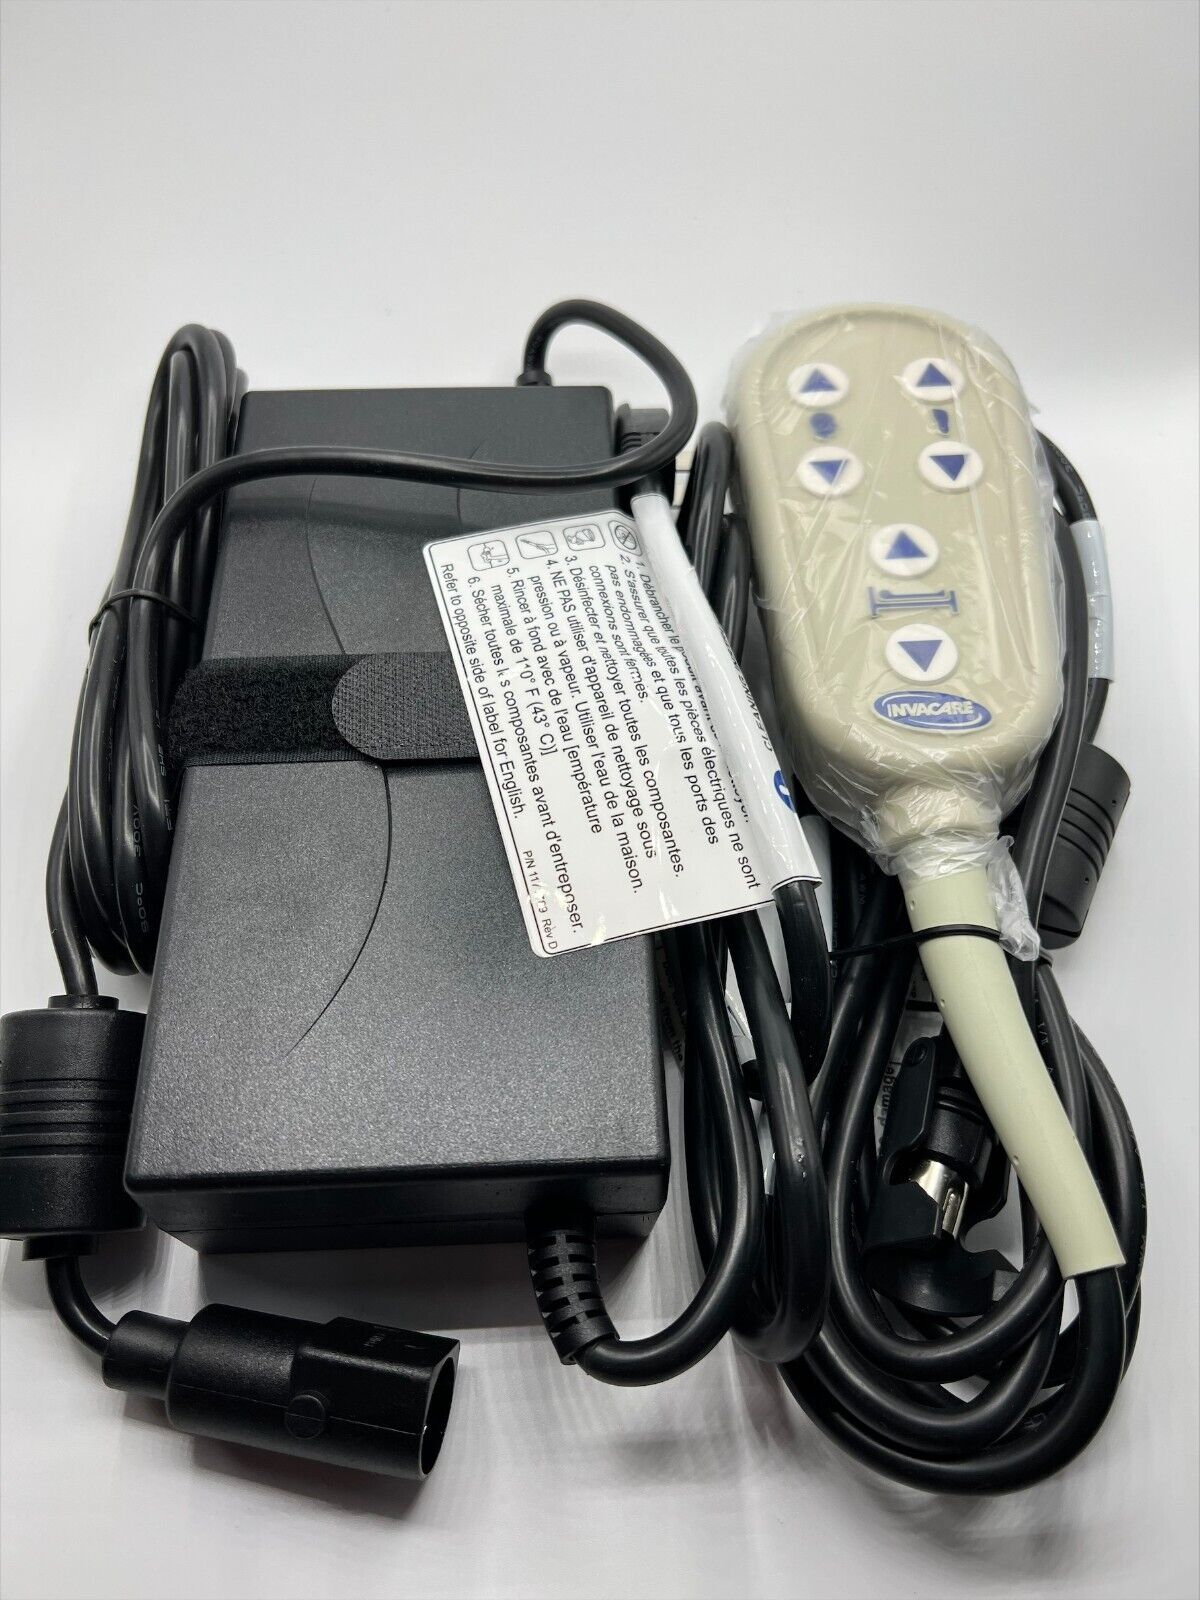 Invacare VA-G54  6-Button Bed Control Pendant 1182430 60108014 & Power Supply